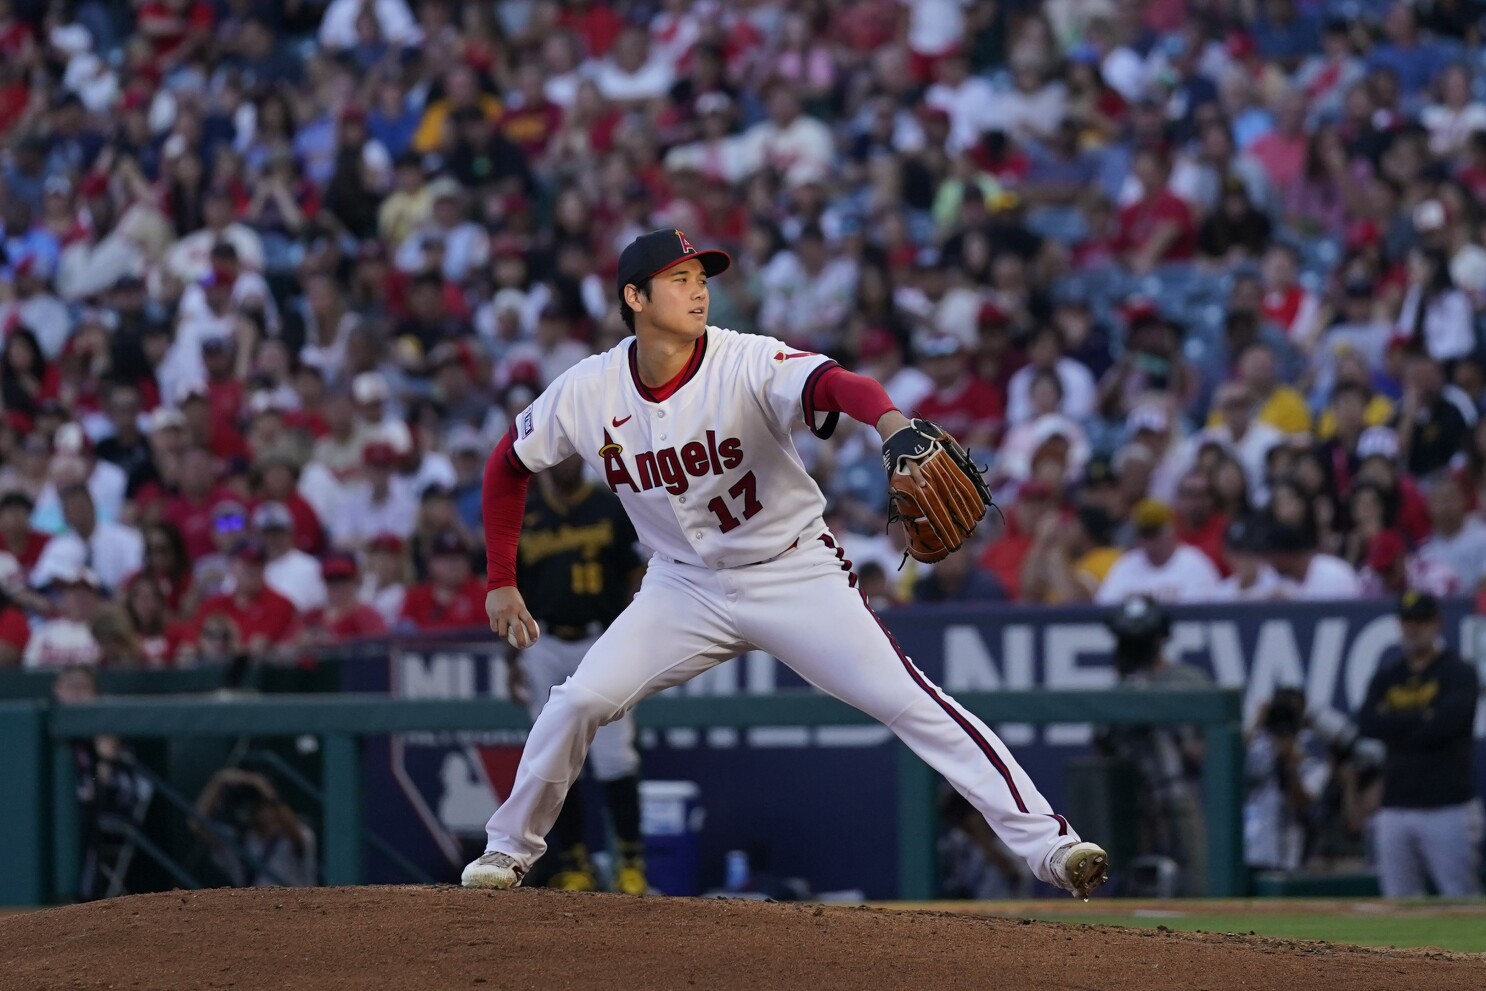 ANAHEIM, CA - APRIL 21: Los Angeles Angels pitcher Shohei Ohtani